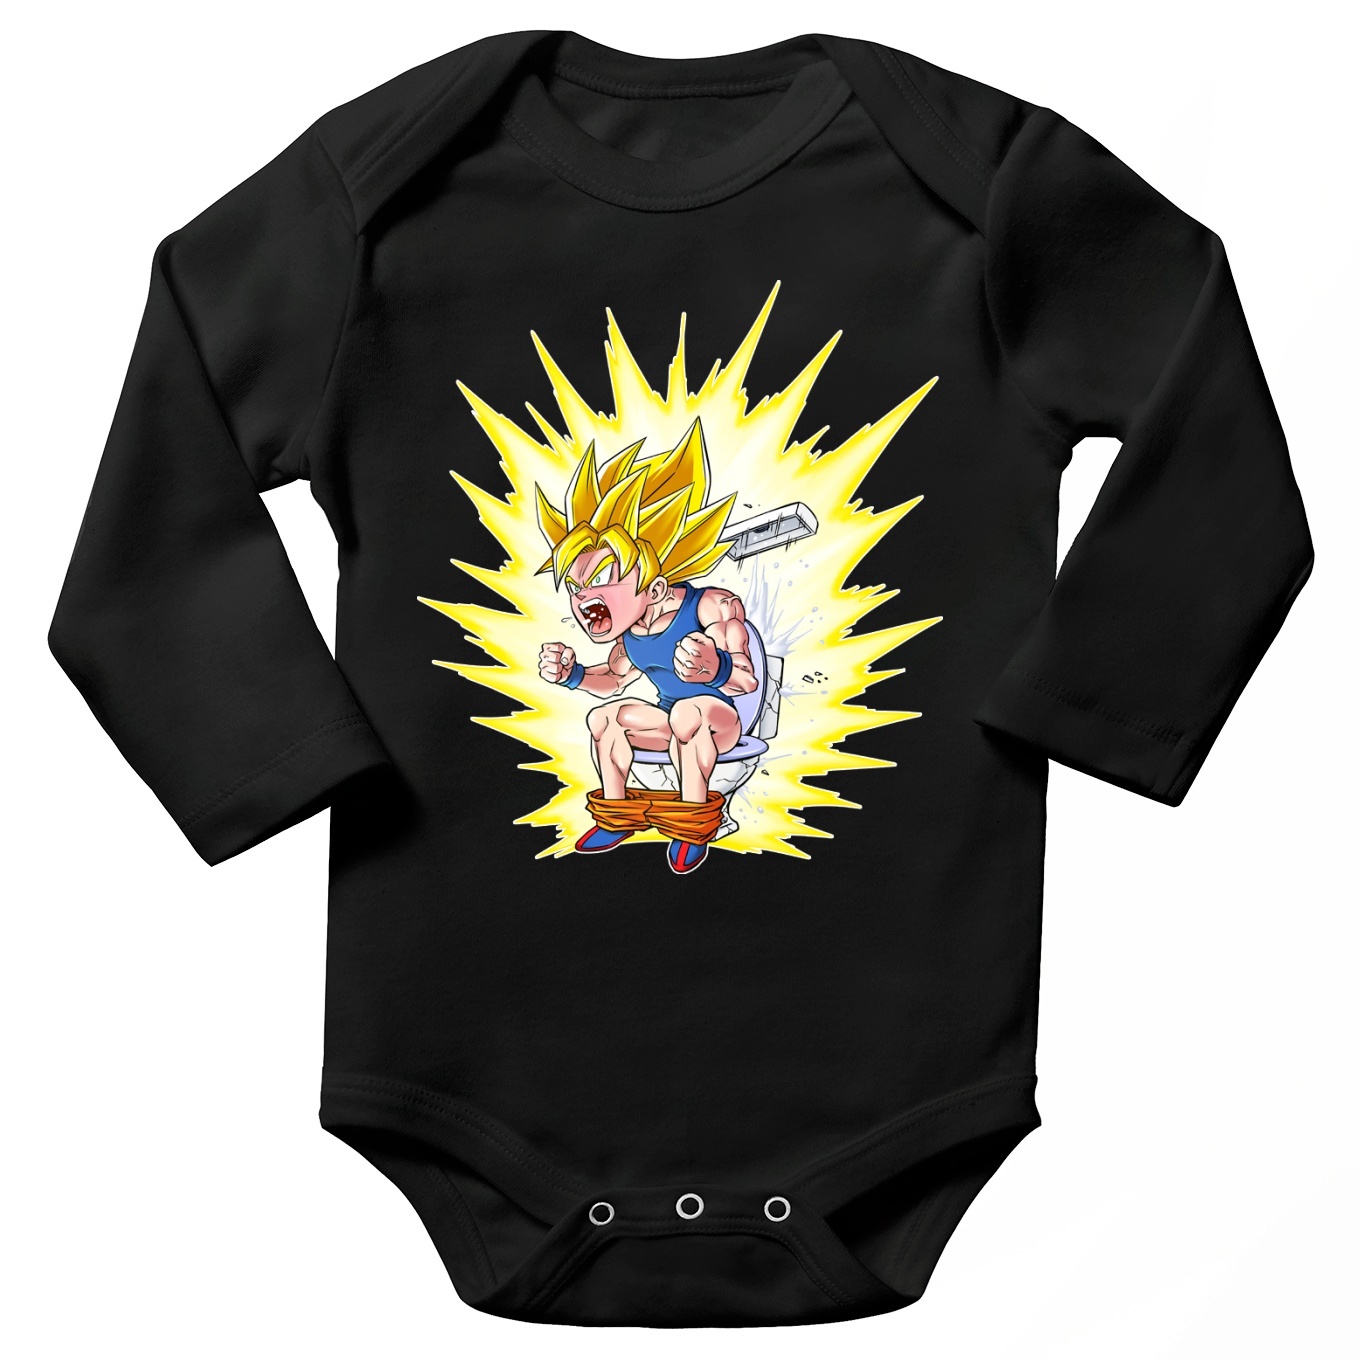 Dragon Ball Super Parody White Short-sleeved baby bodysuit - Son Goku Super  Saiyajin (Funny Dragon Ball Super Parody - High Quality Babygrow - Size  1192 - Ref : 1192)